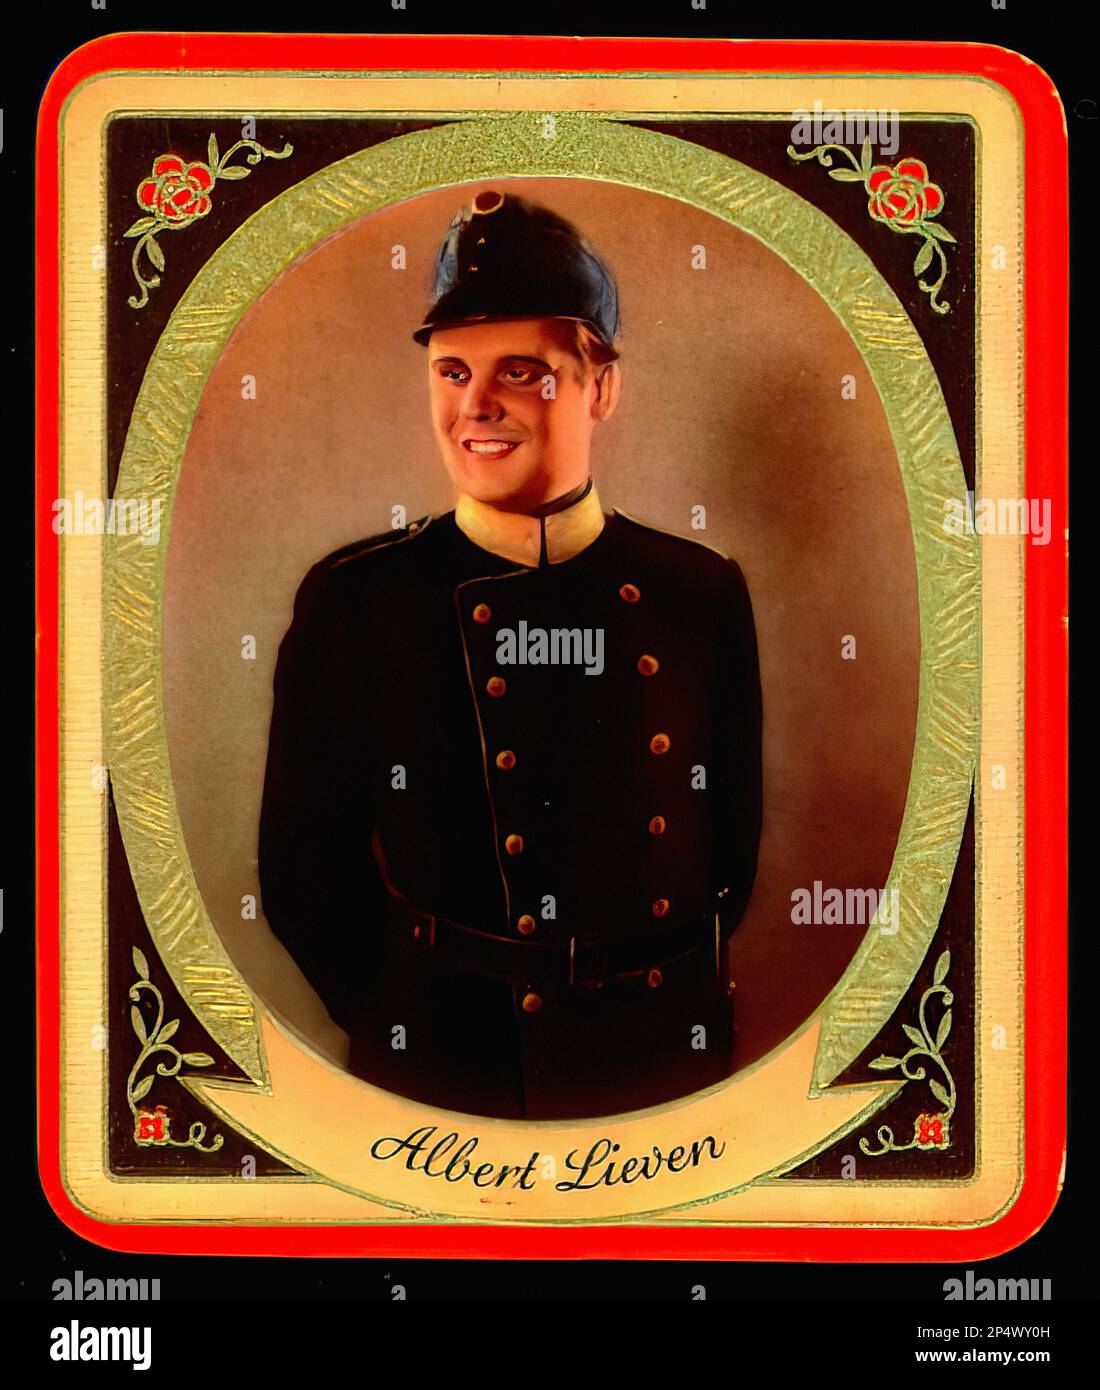 Portrait of Albert Lieven - Vintage German Cigarette Card Stock Photo